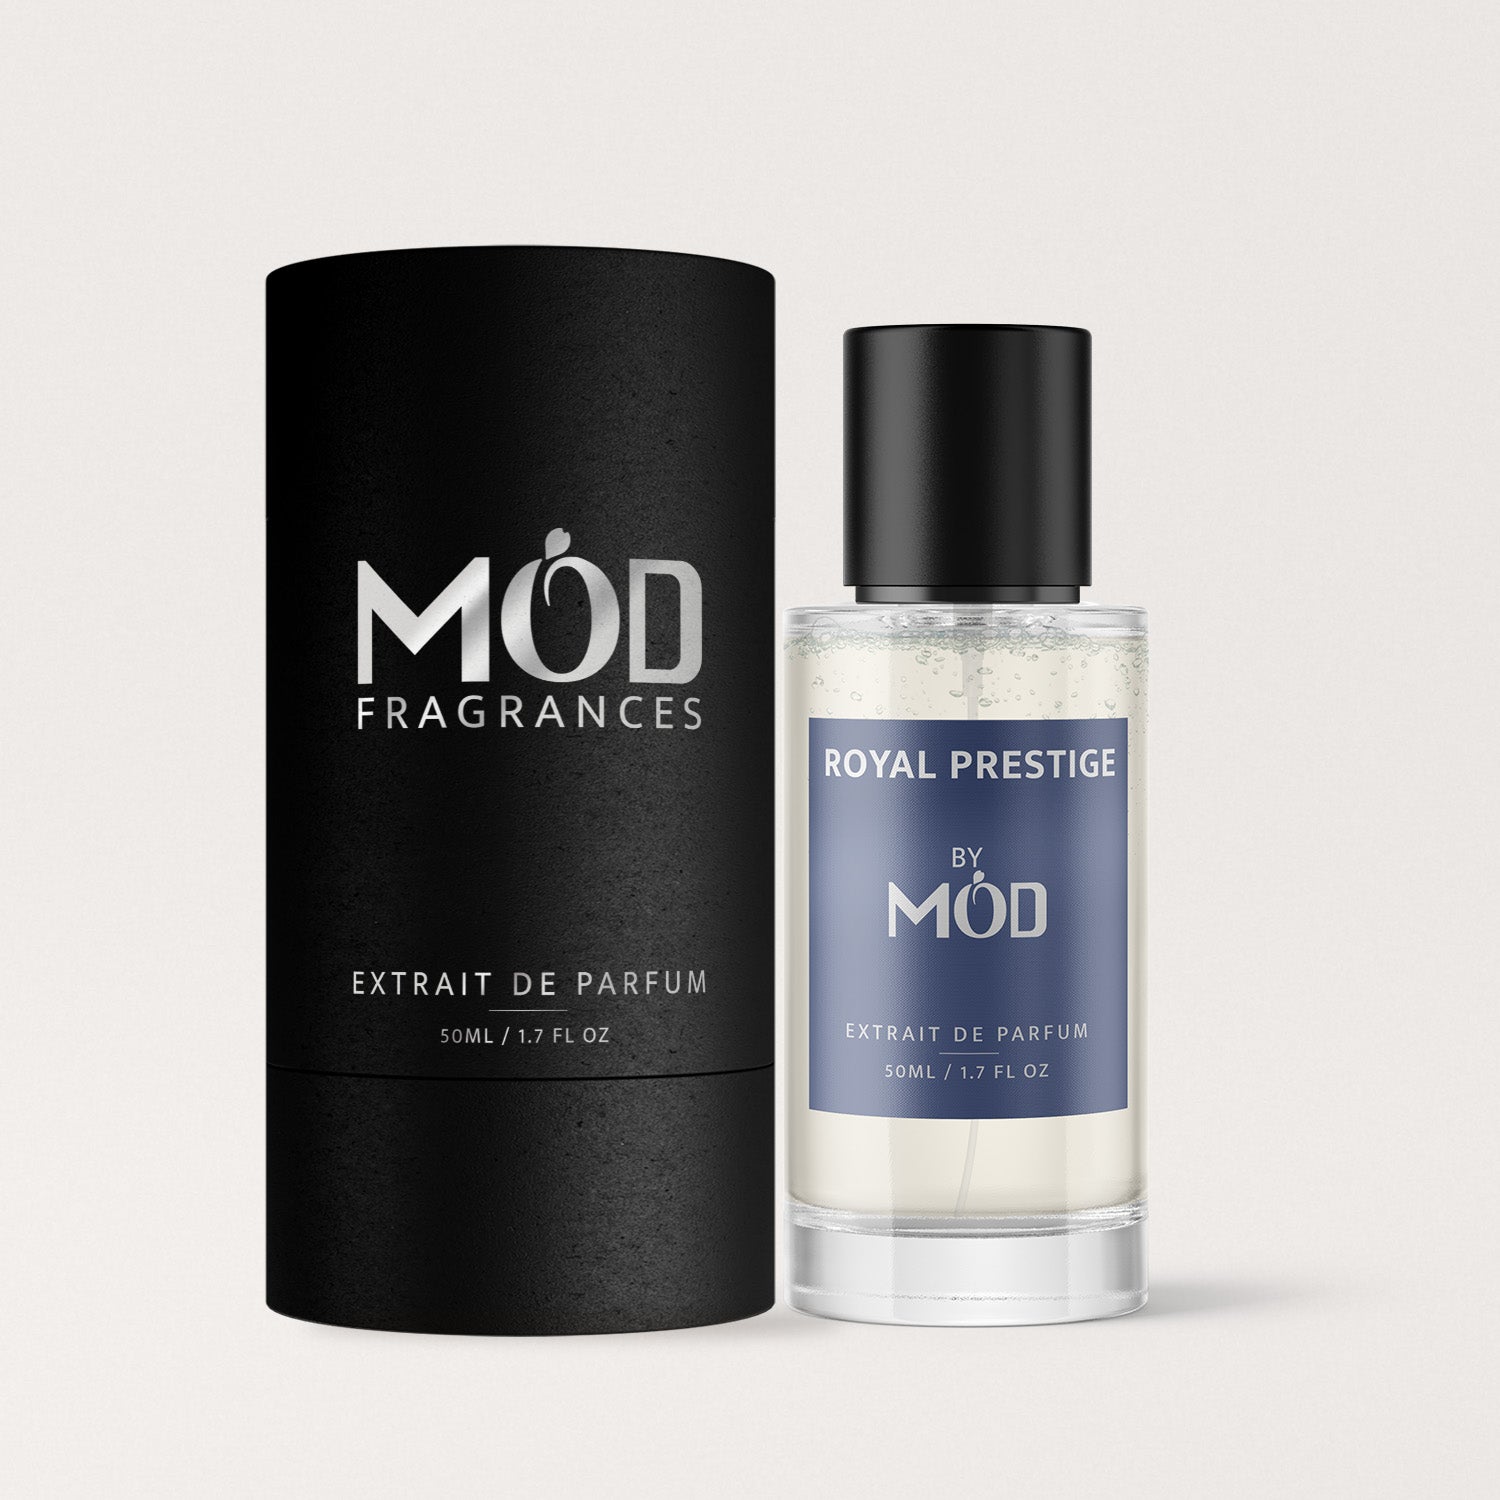 Royal Prestige - Mod Fragrances